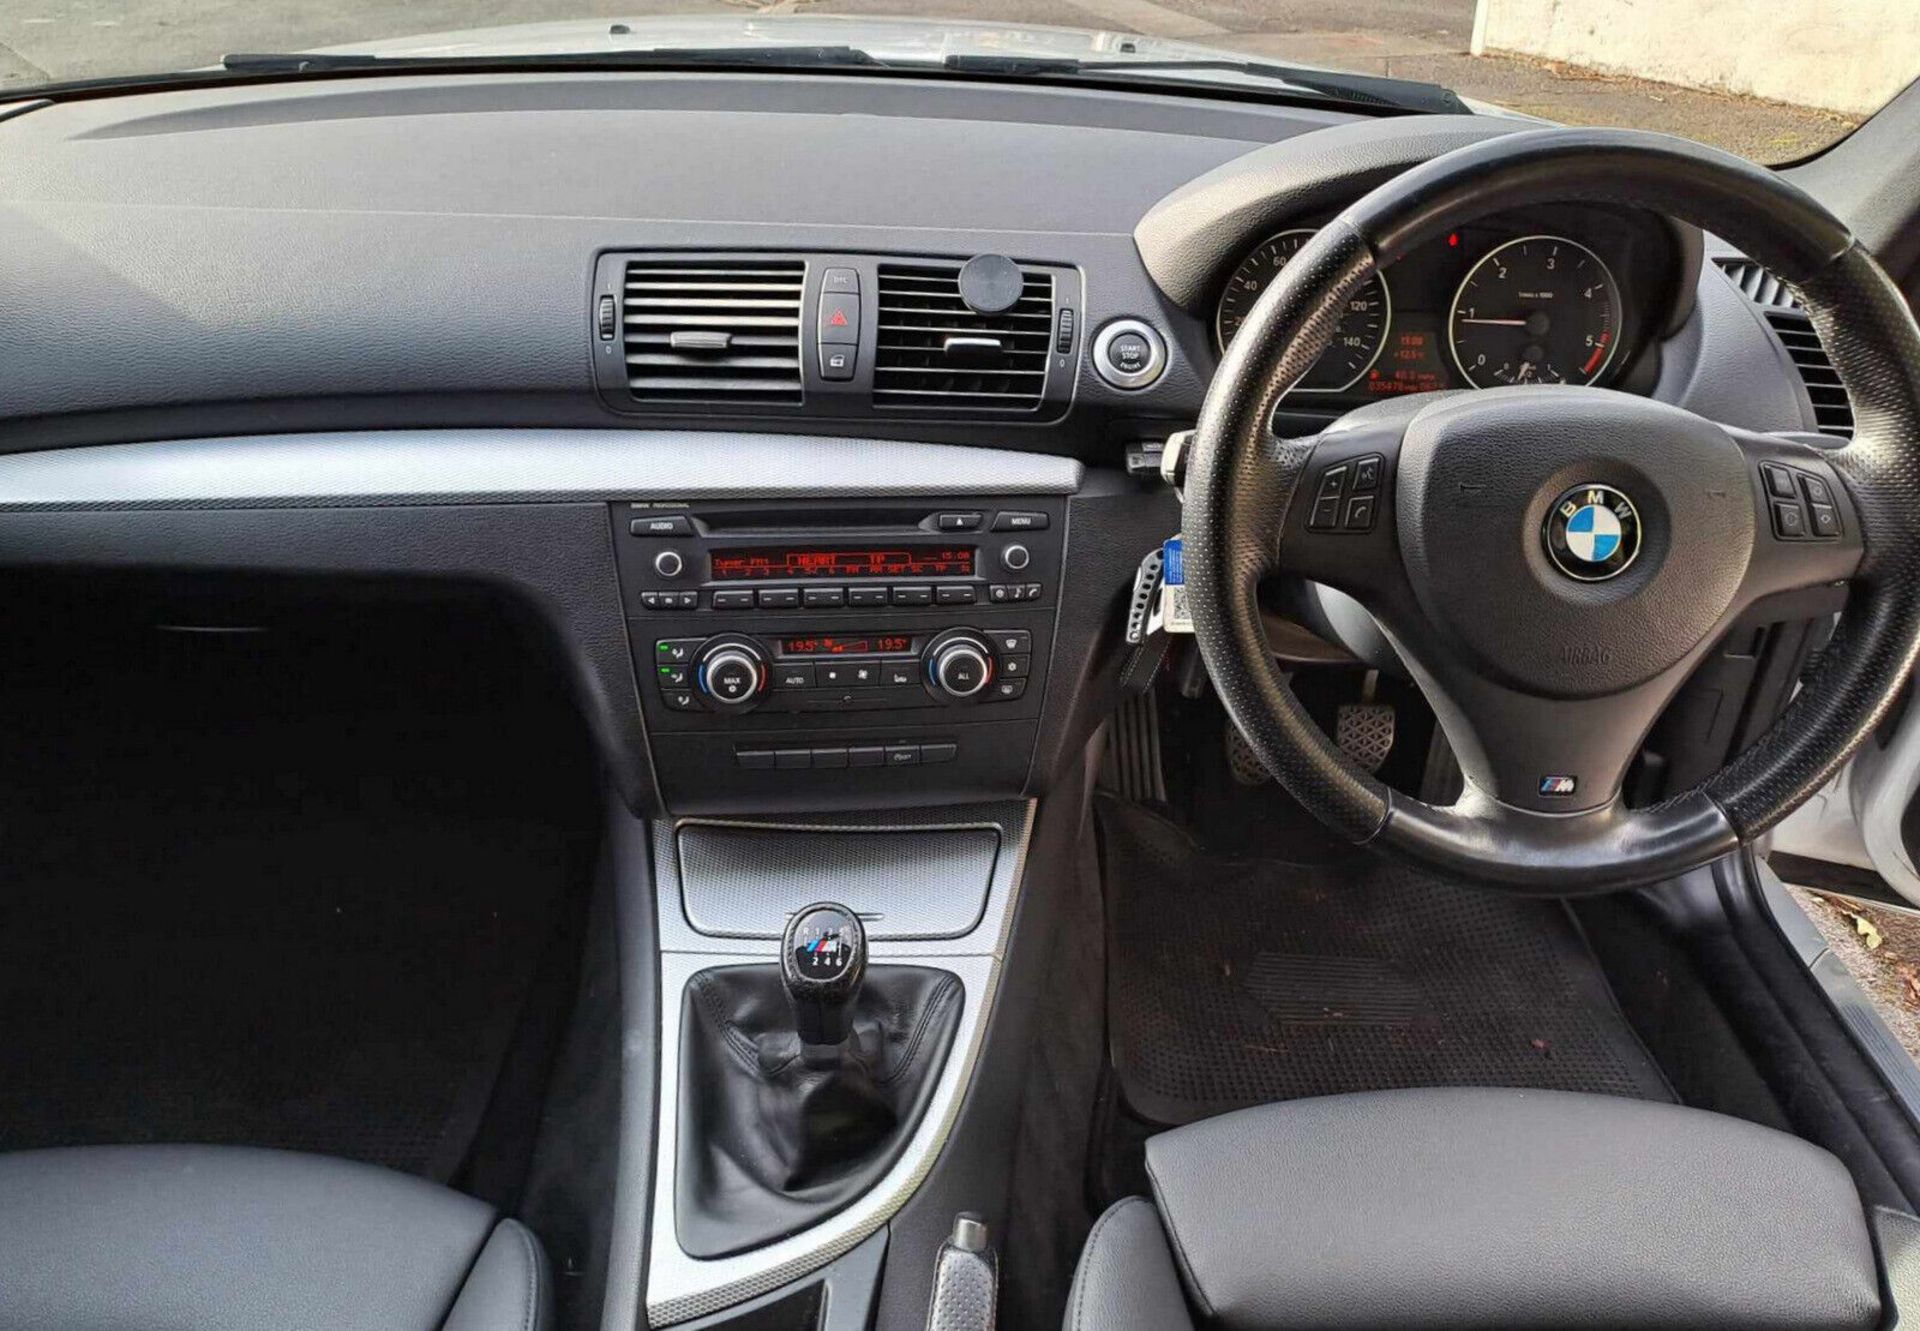 2011, BMW 1 Series - 116d M-Sport - Image 10 of 15